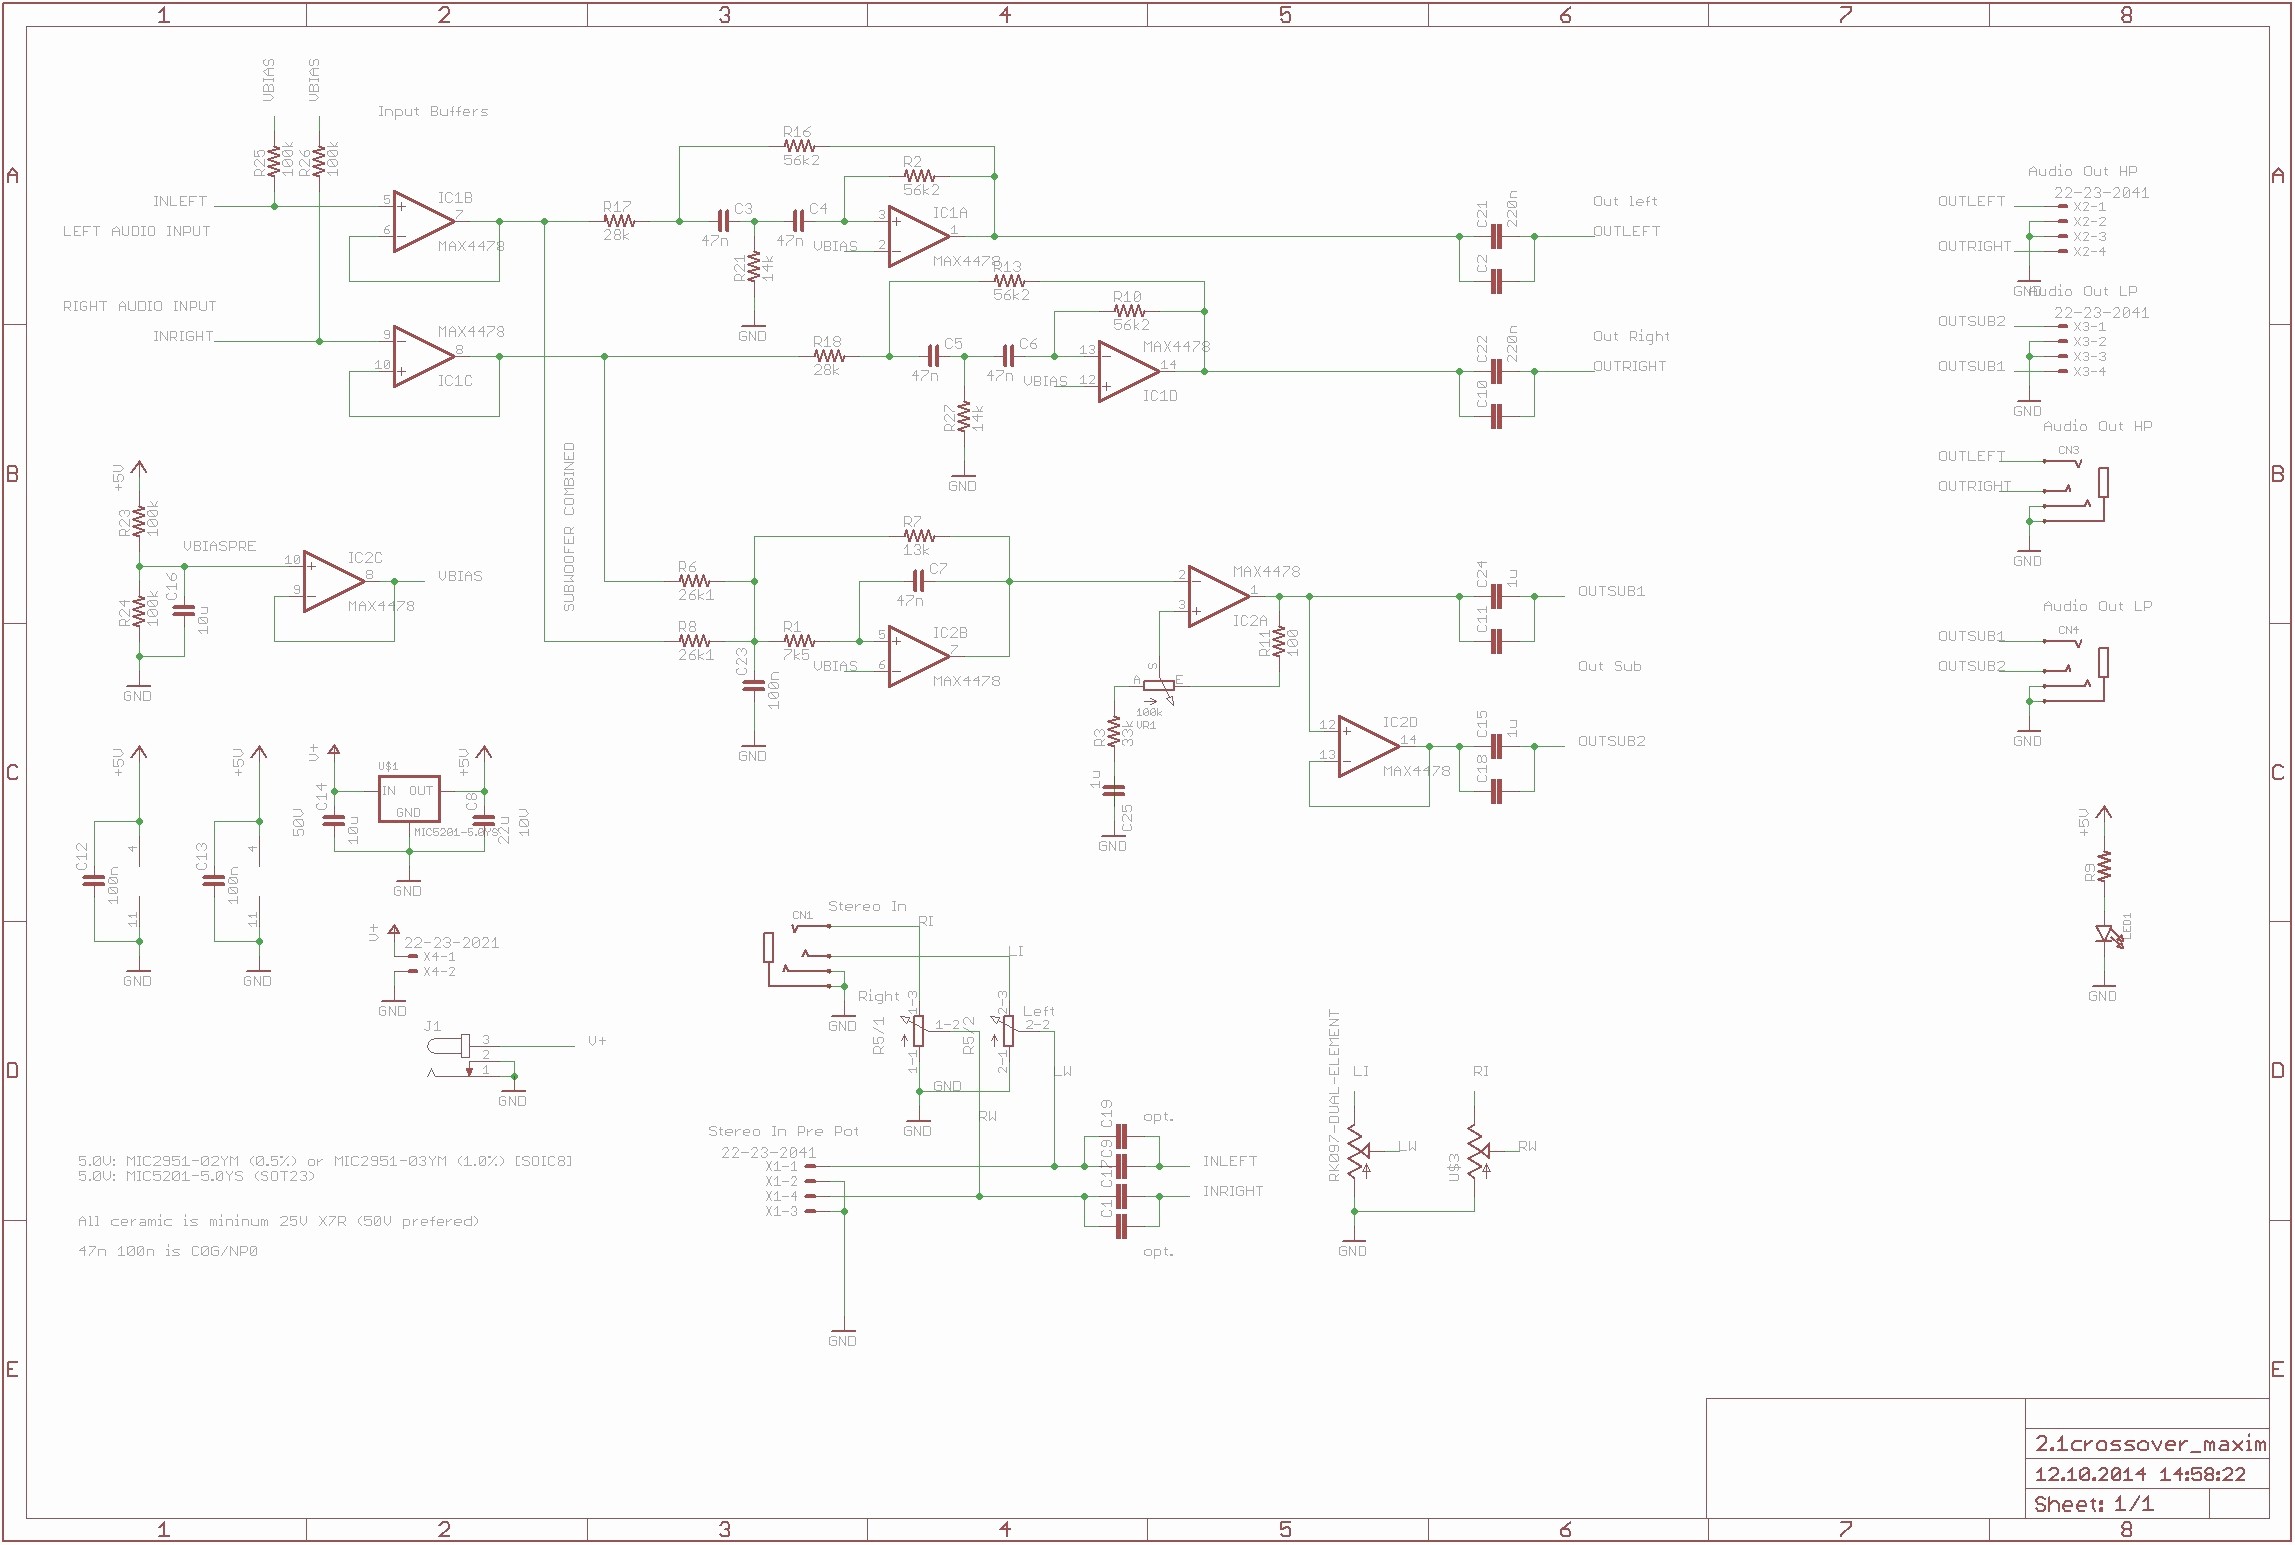 Led Trailer Lights Wiring Diagram Full Size Wiring Diagram Wiring Diagram for Led Trailer